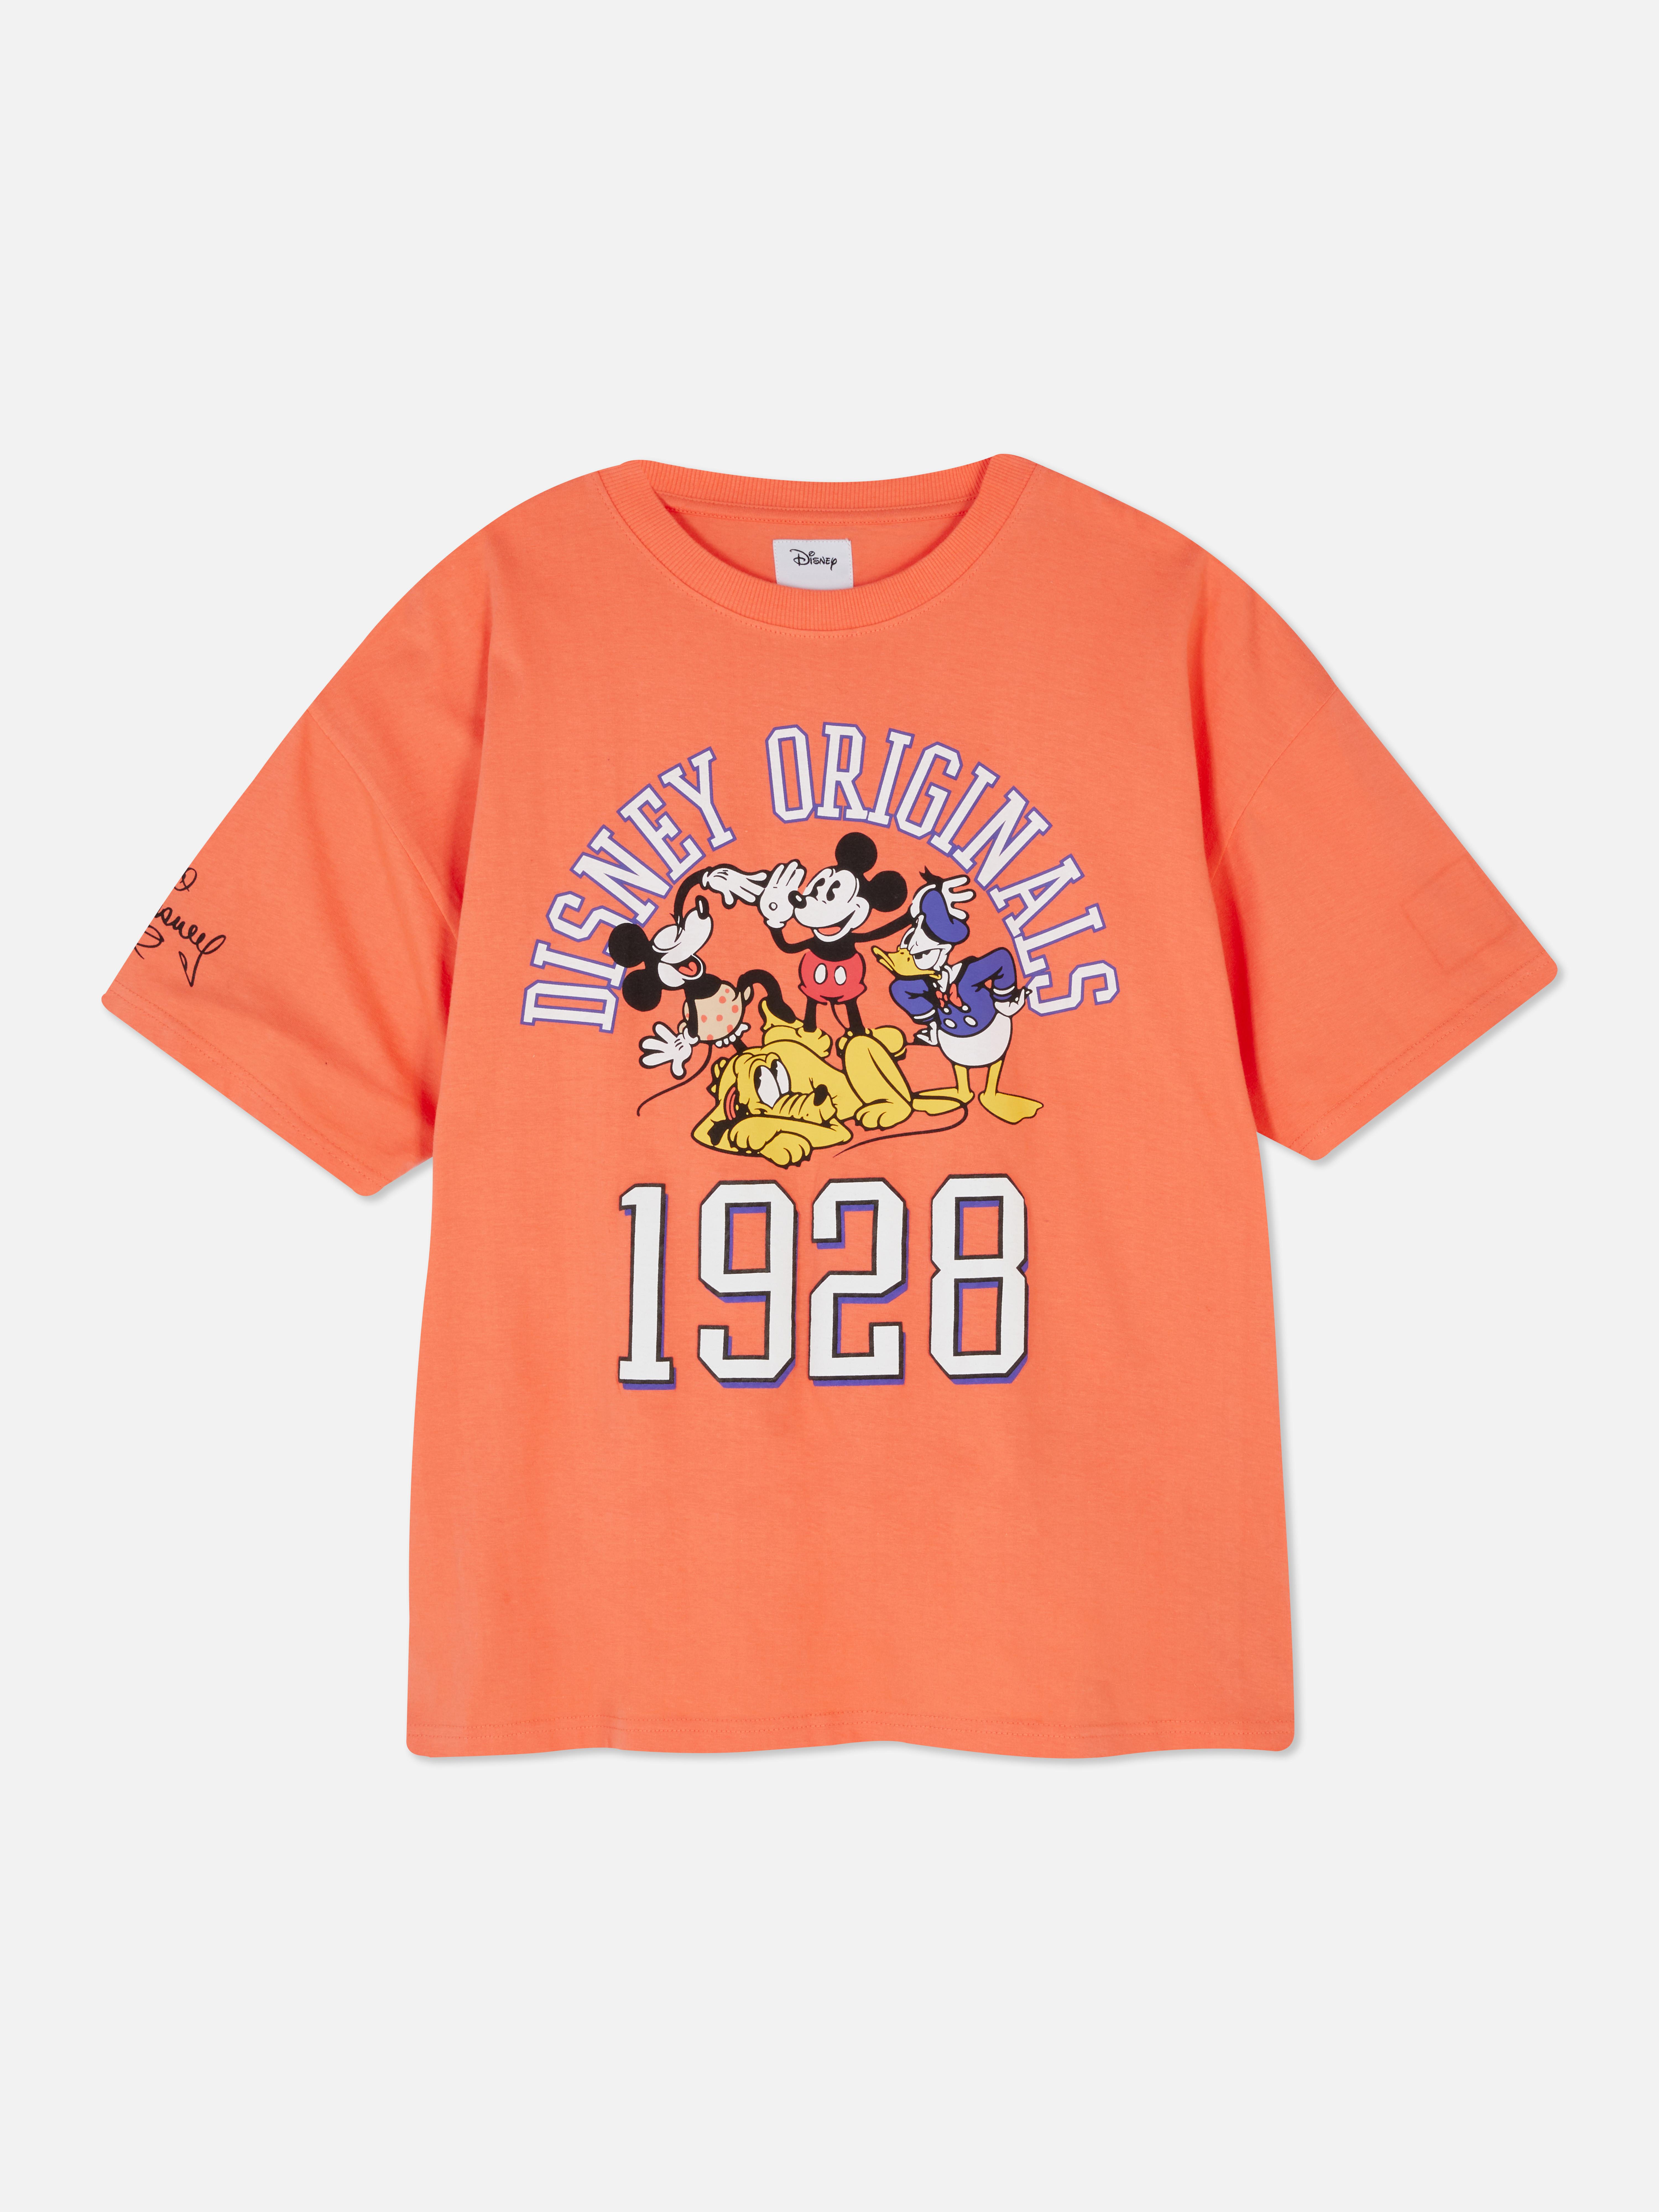 Disney’s Originals Relaxed T-shirt